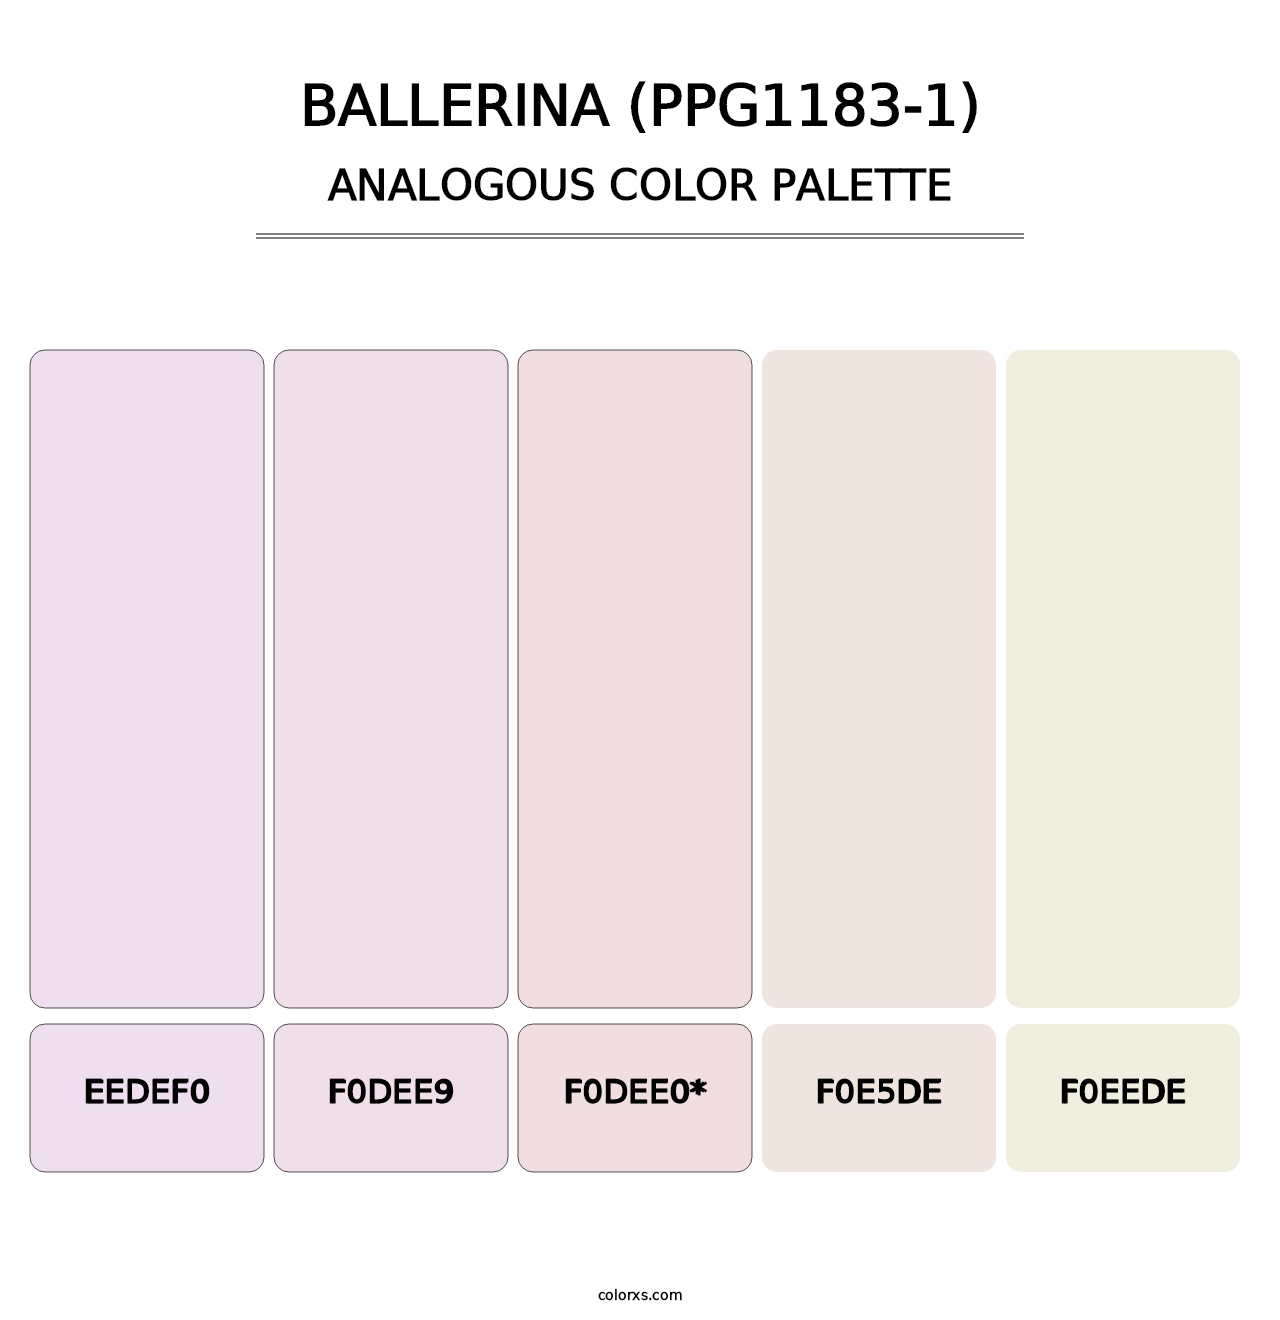 Ballerina (PPG1183-1) - Analogous Color Palette